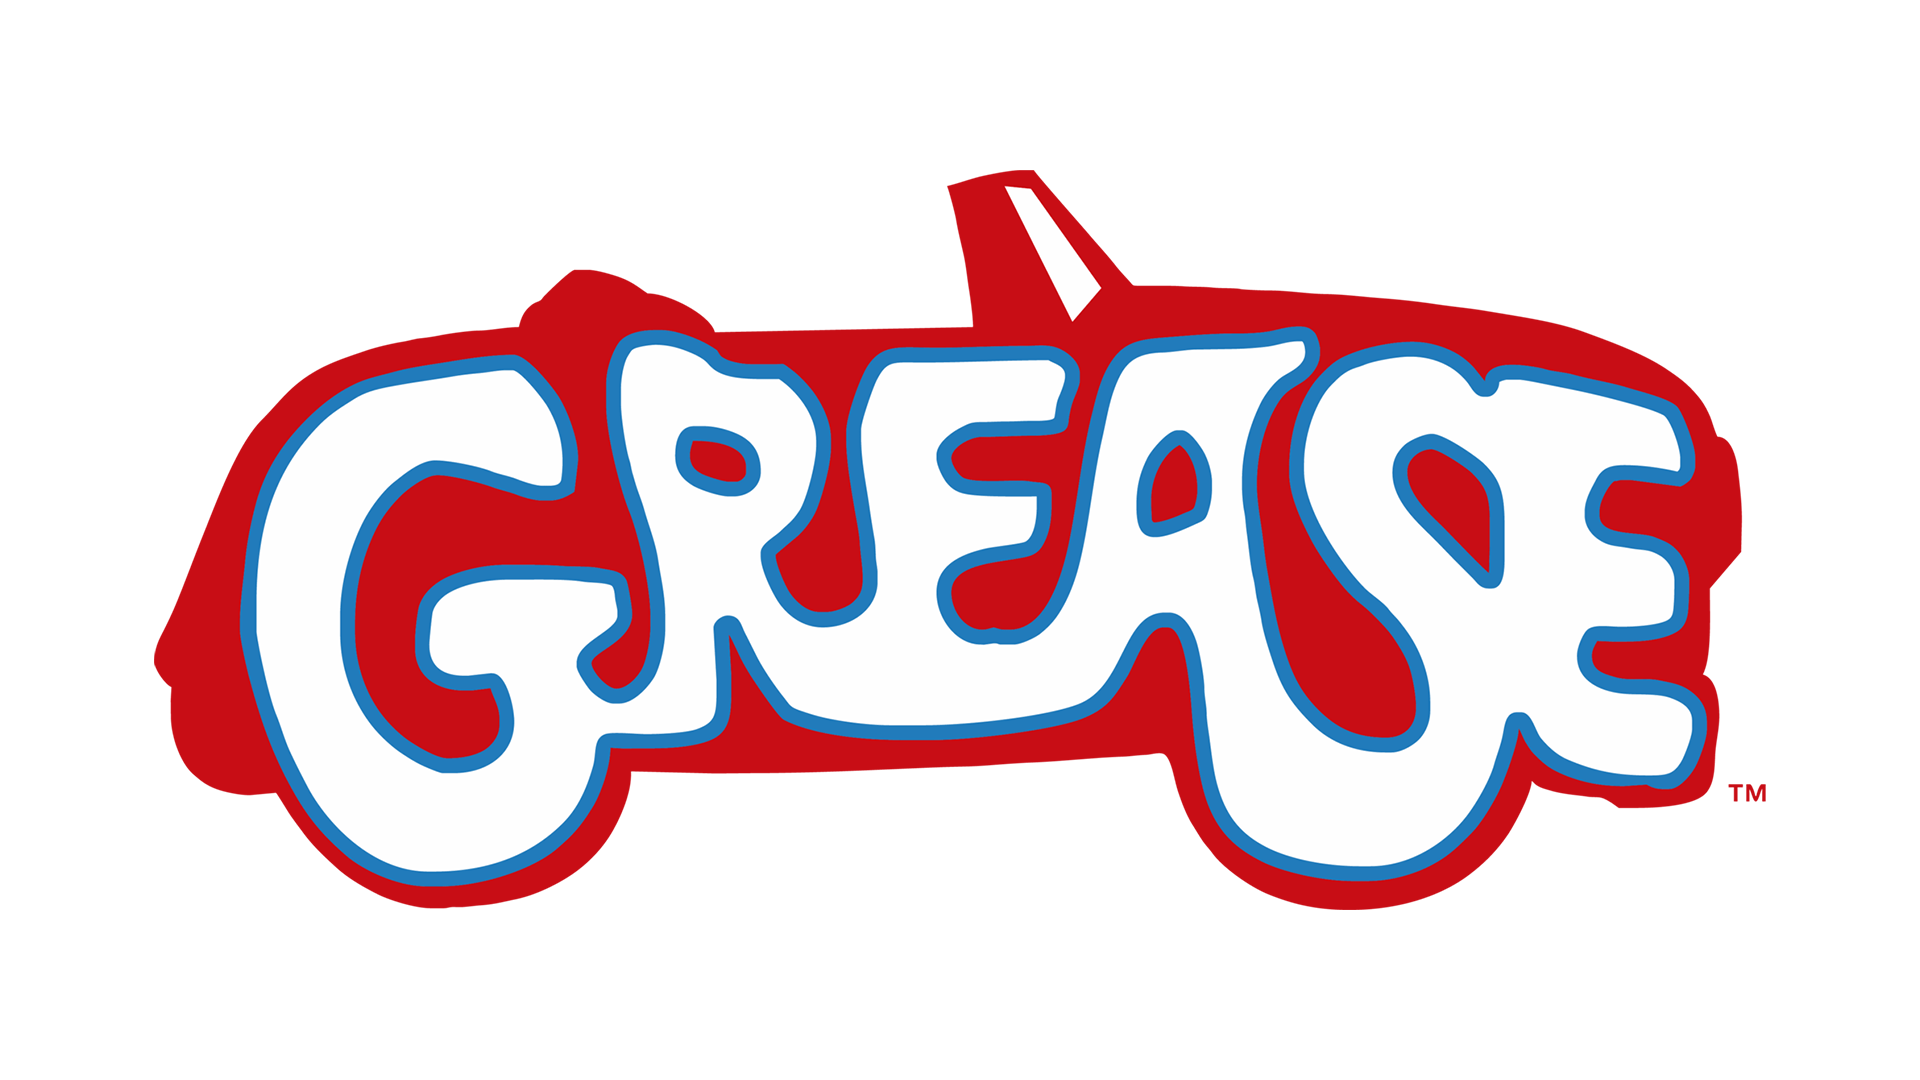 Grease Logo